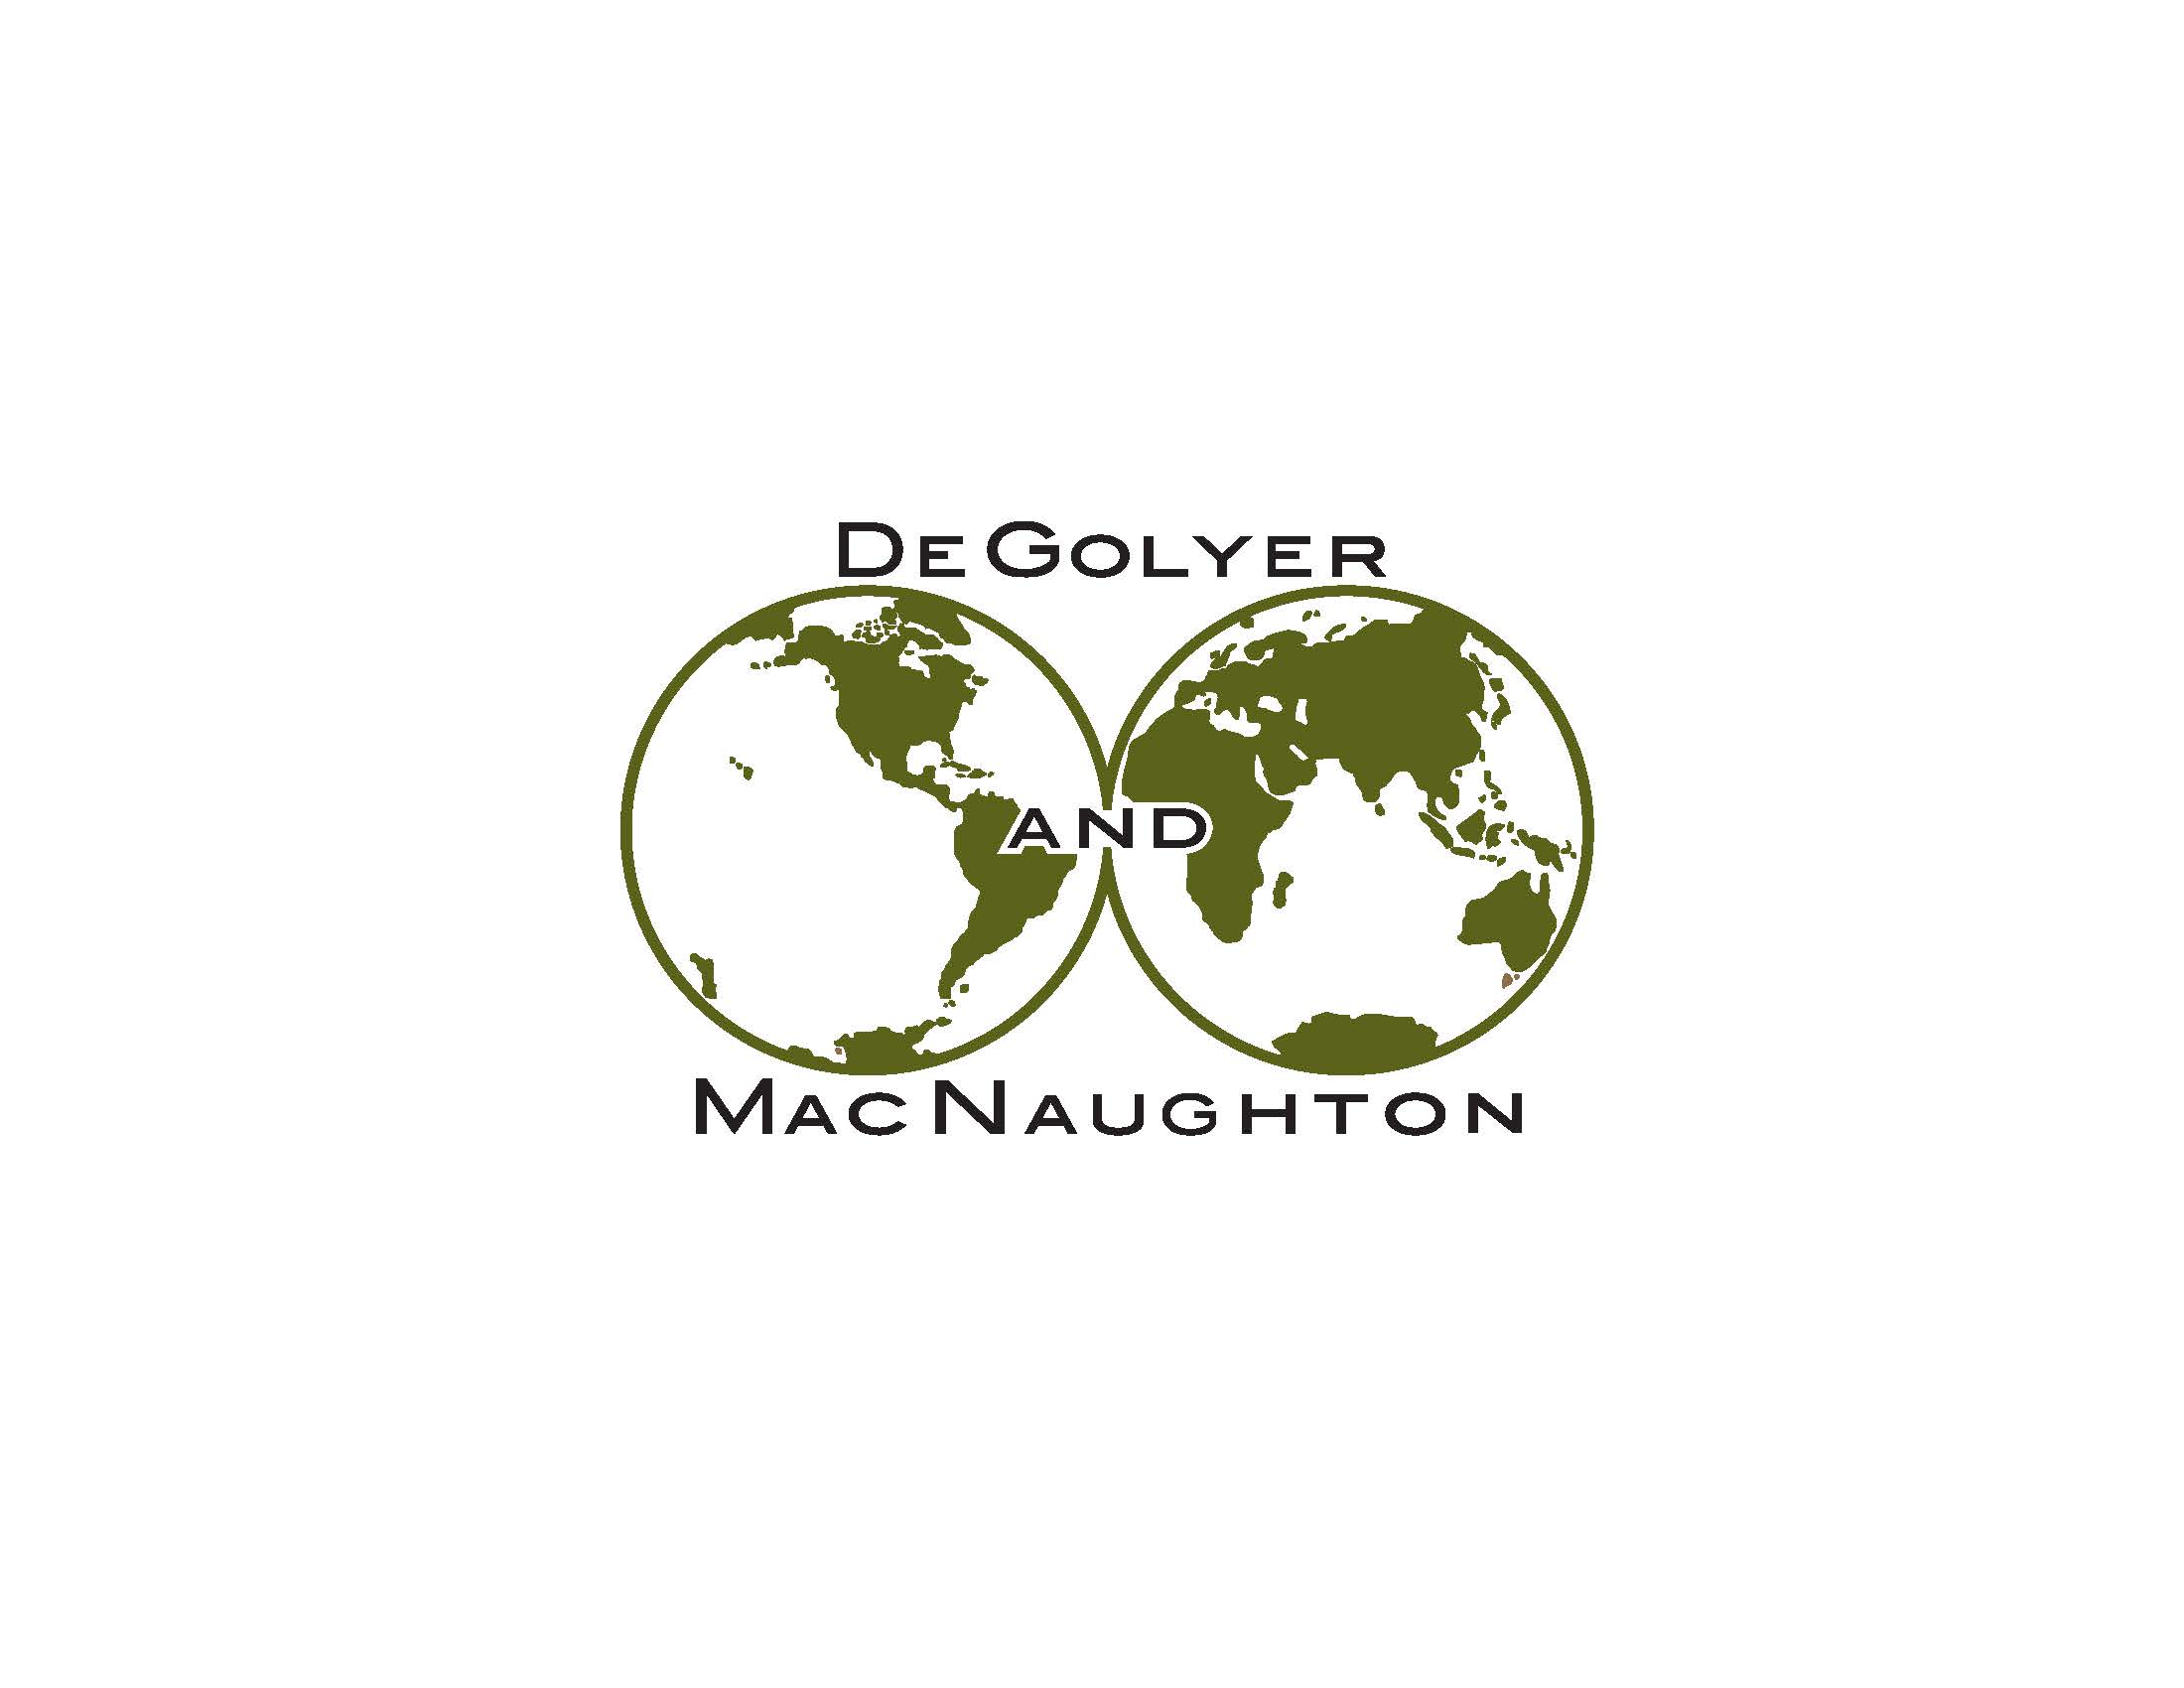 DeGolyer and MacNaughton